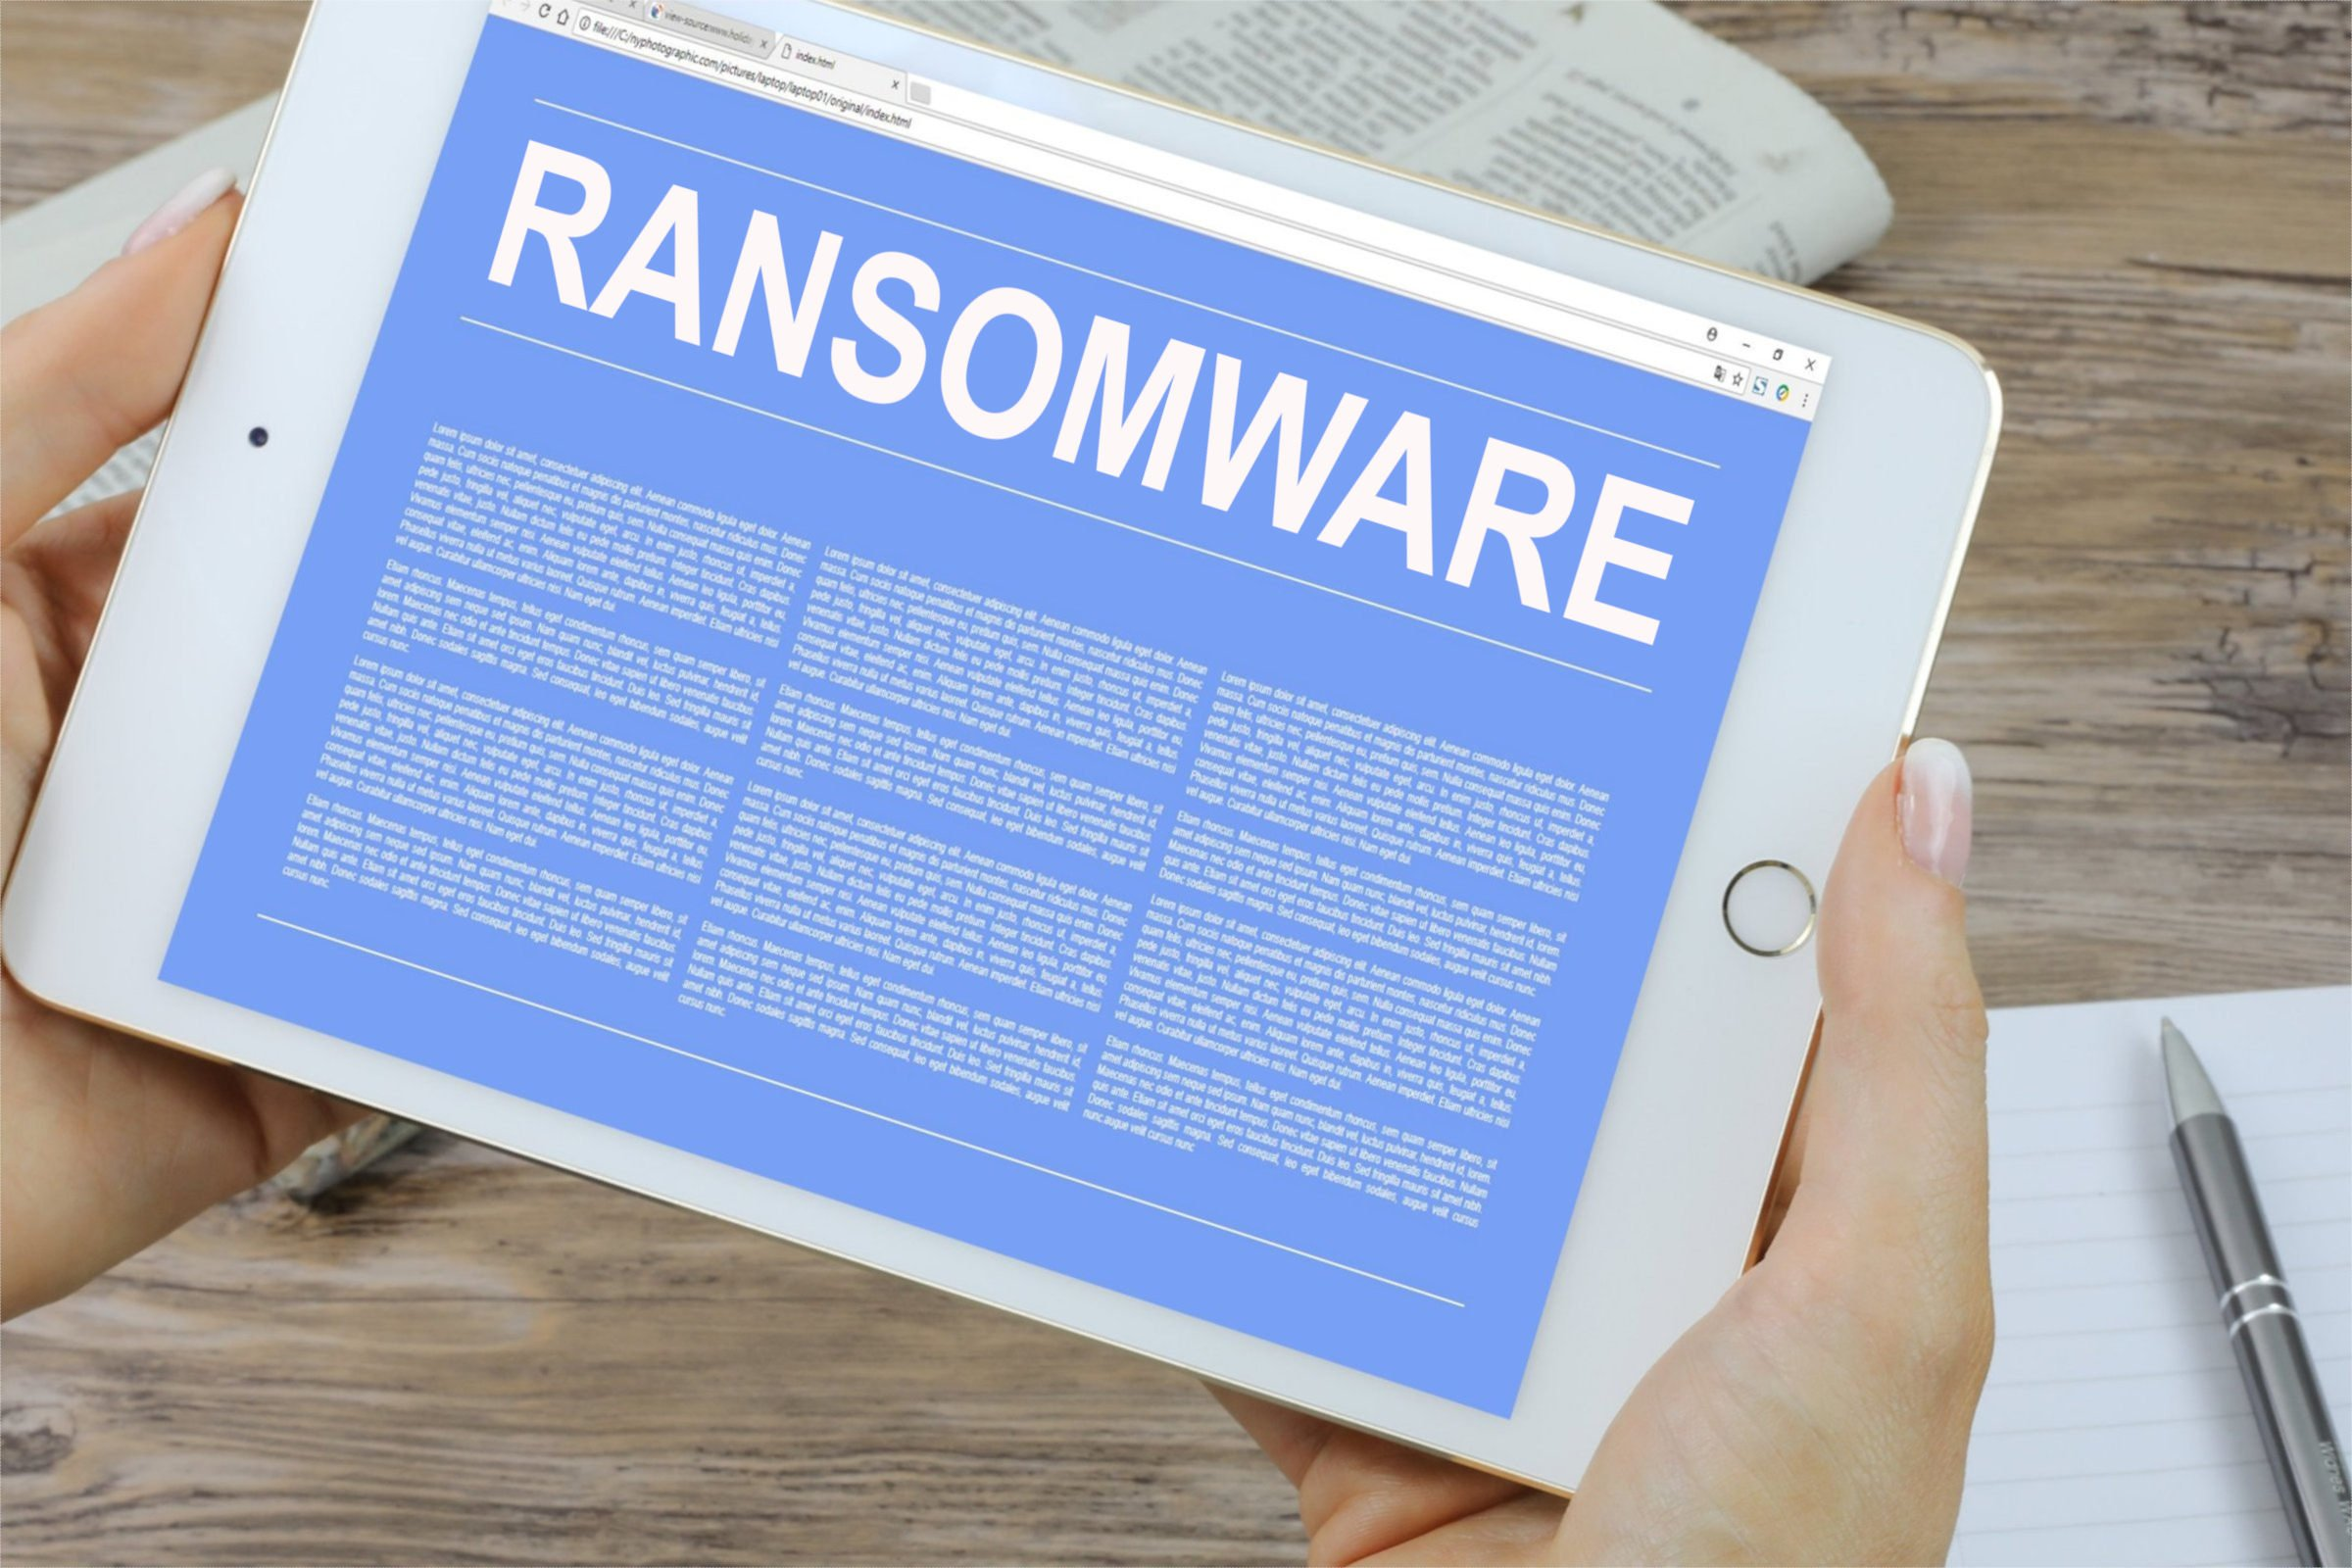 medidas para reaccionar frente al ransomware